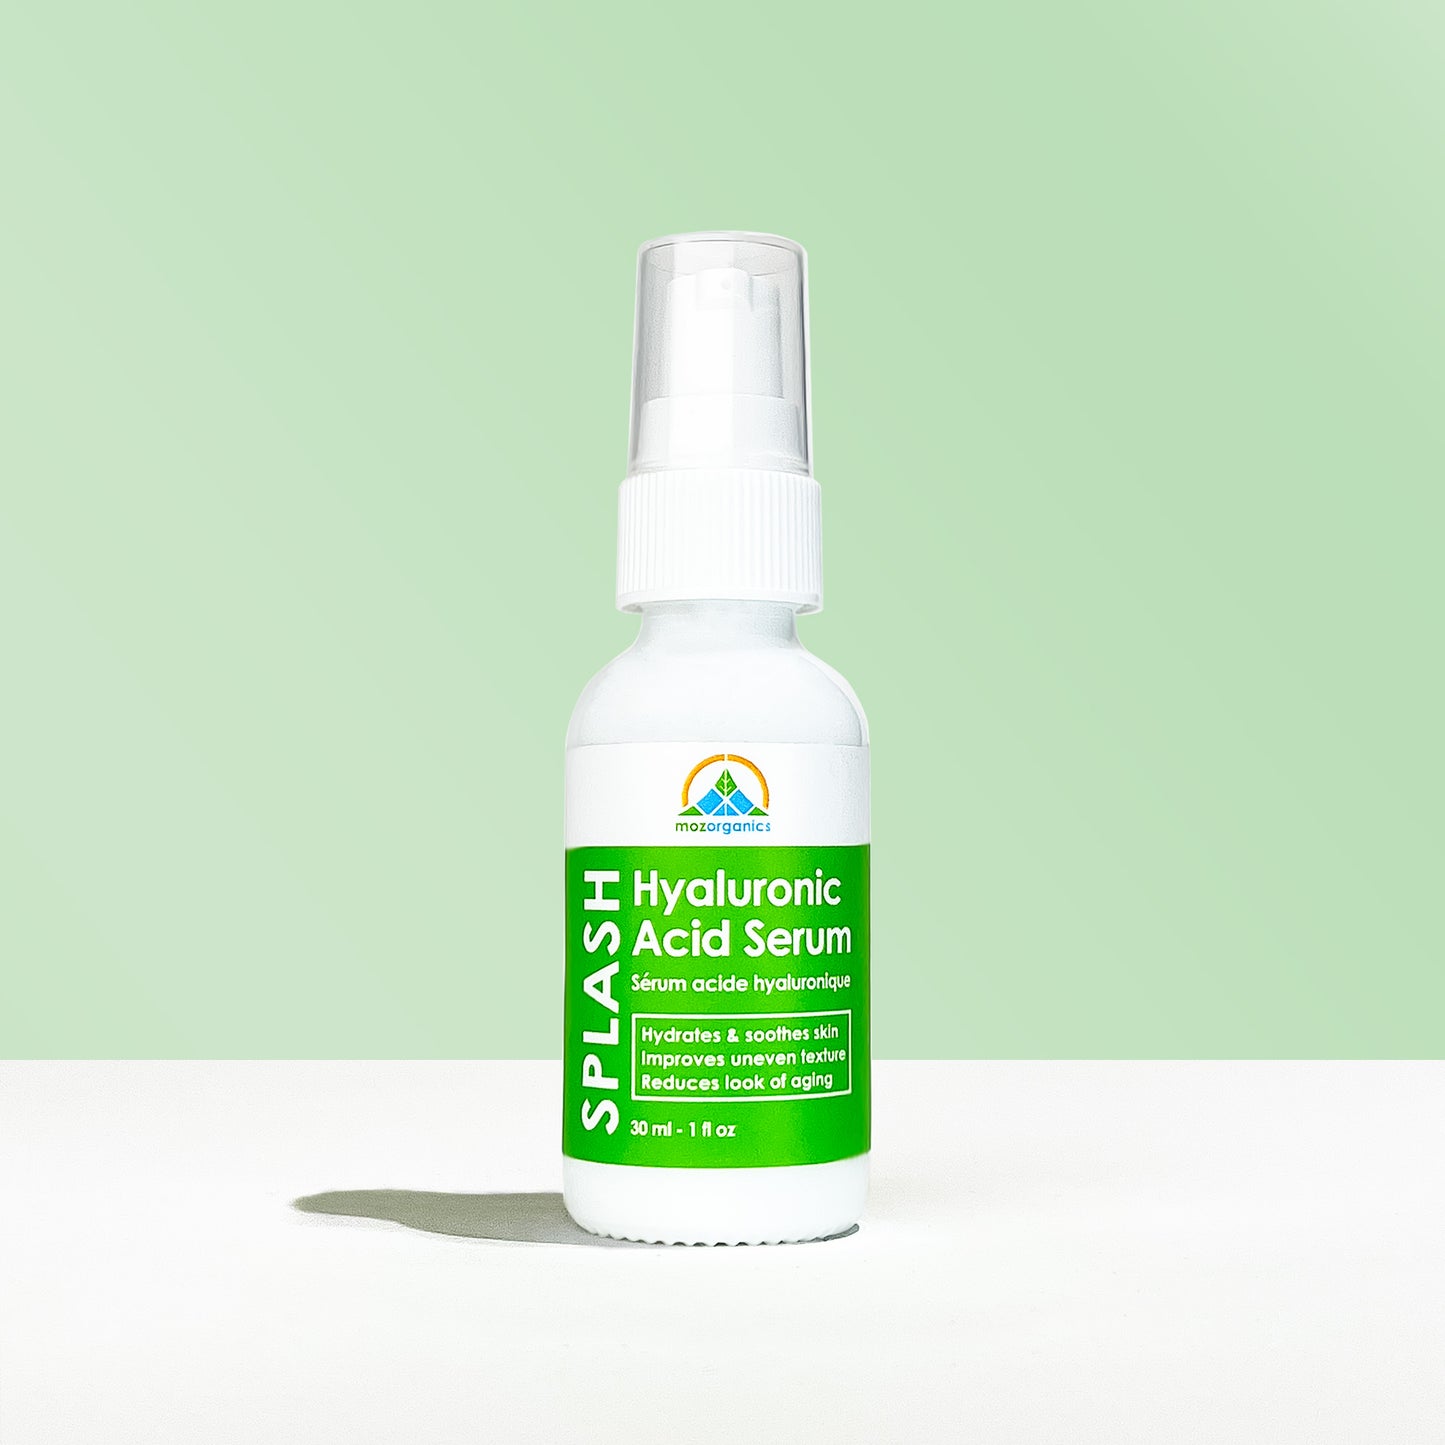 Hyaluronic Acid Serum: Best Face Serum for Plump, Firm, Wrinkle-Free Skin